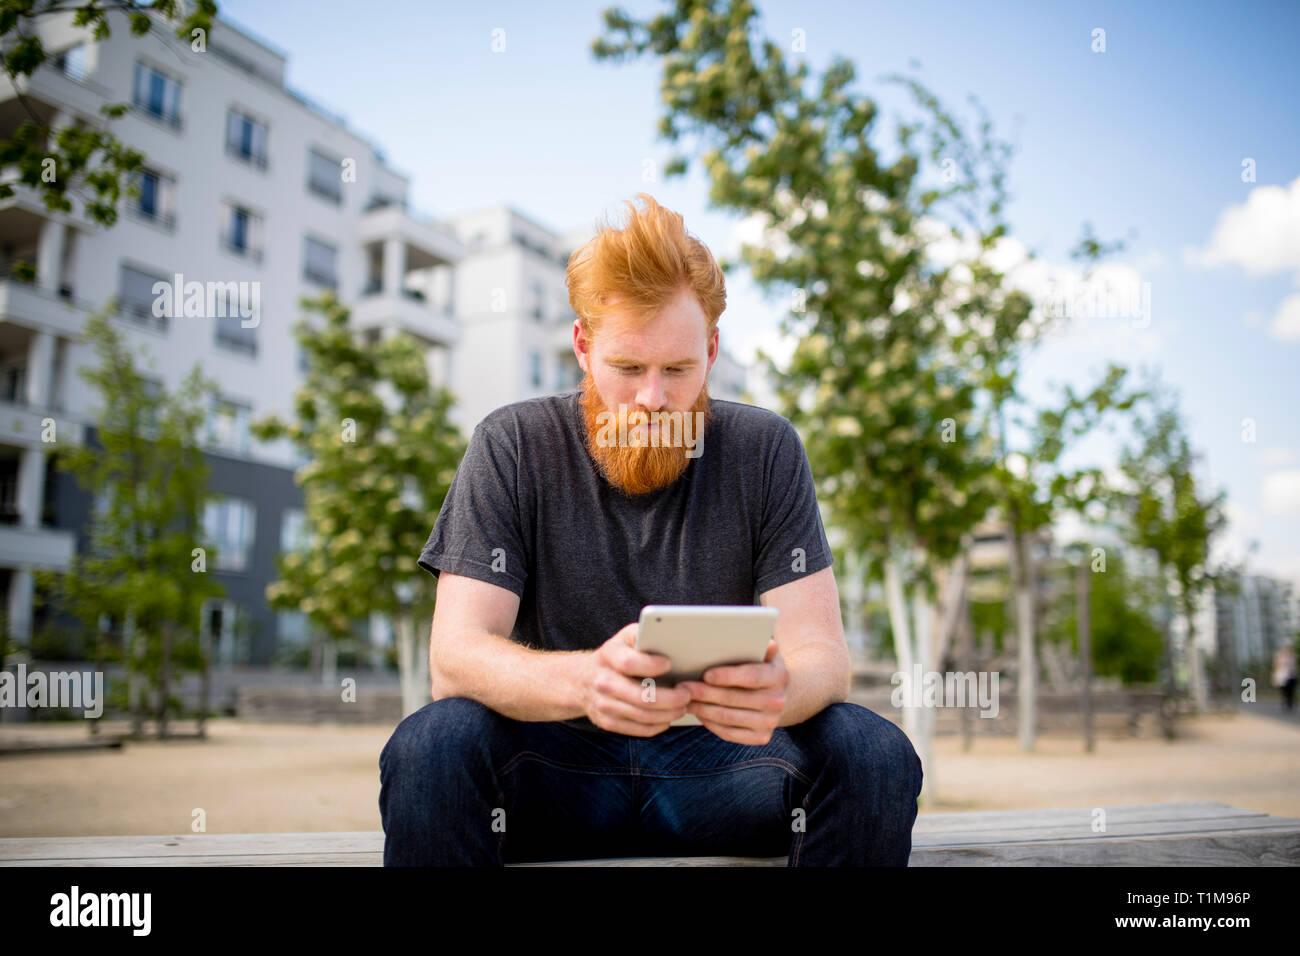 Man with beard using digital tablet on urban bench Stock Photo